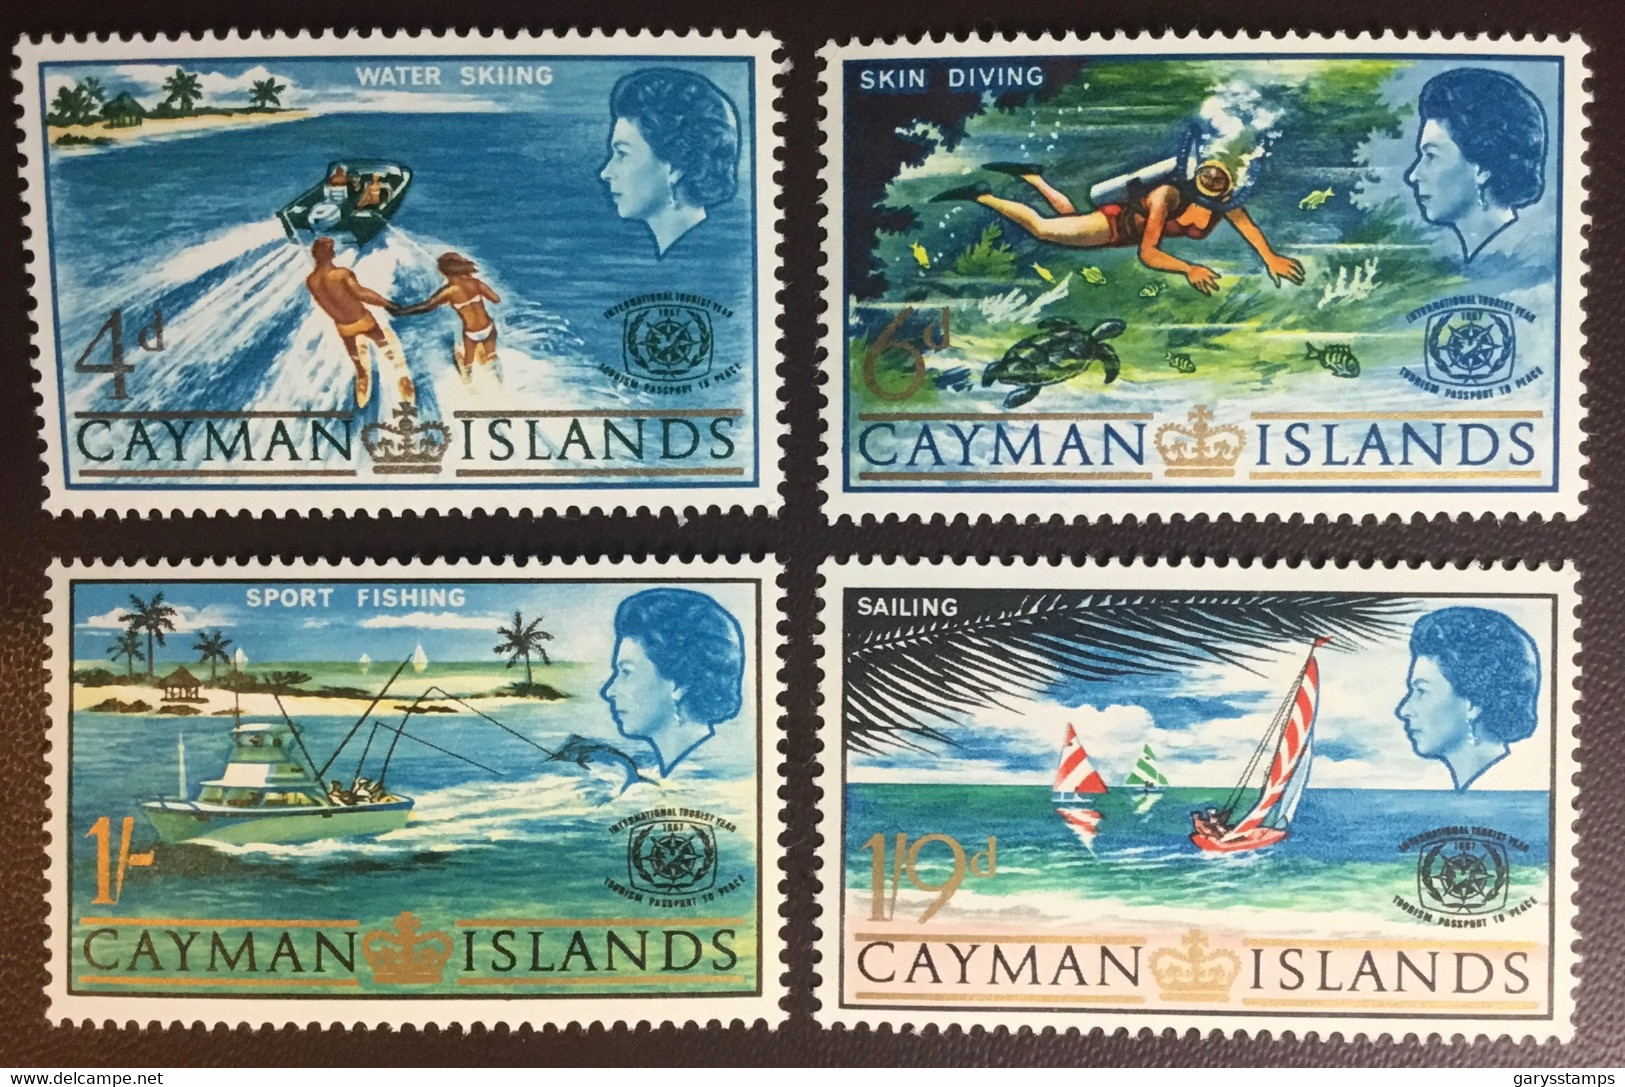 Cayman Islands 1967 Tourism Marine Life MNH - Iles Caïmans